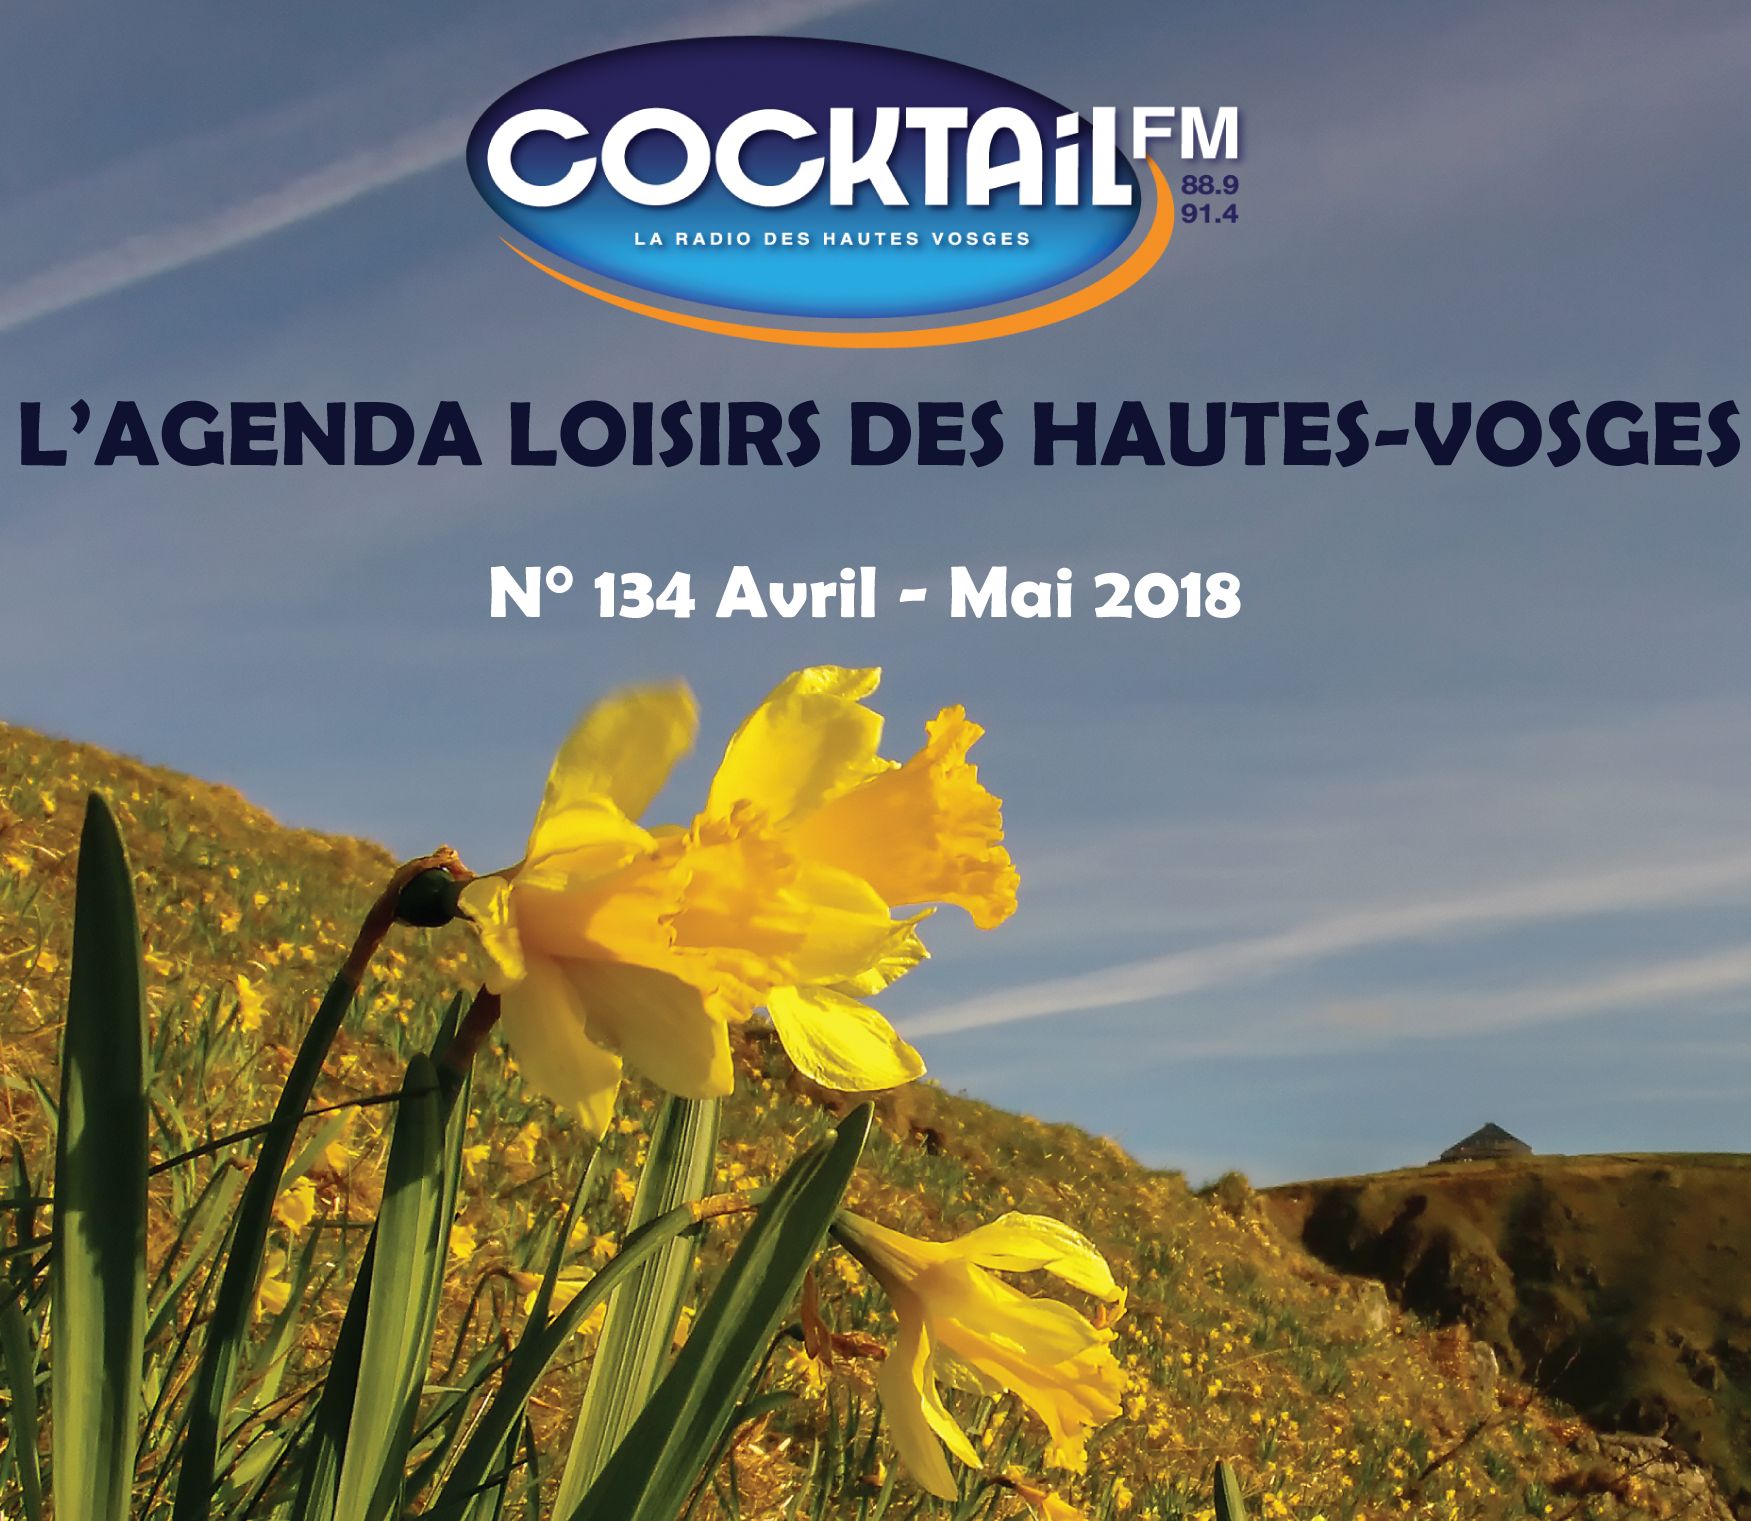 AGENDA LOISIRS COCKTAIL FM avril - mai 2018